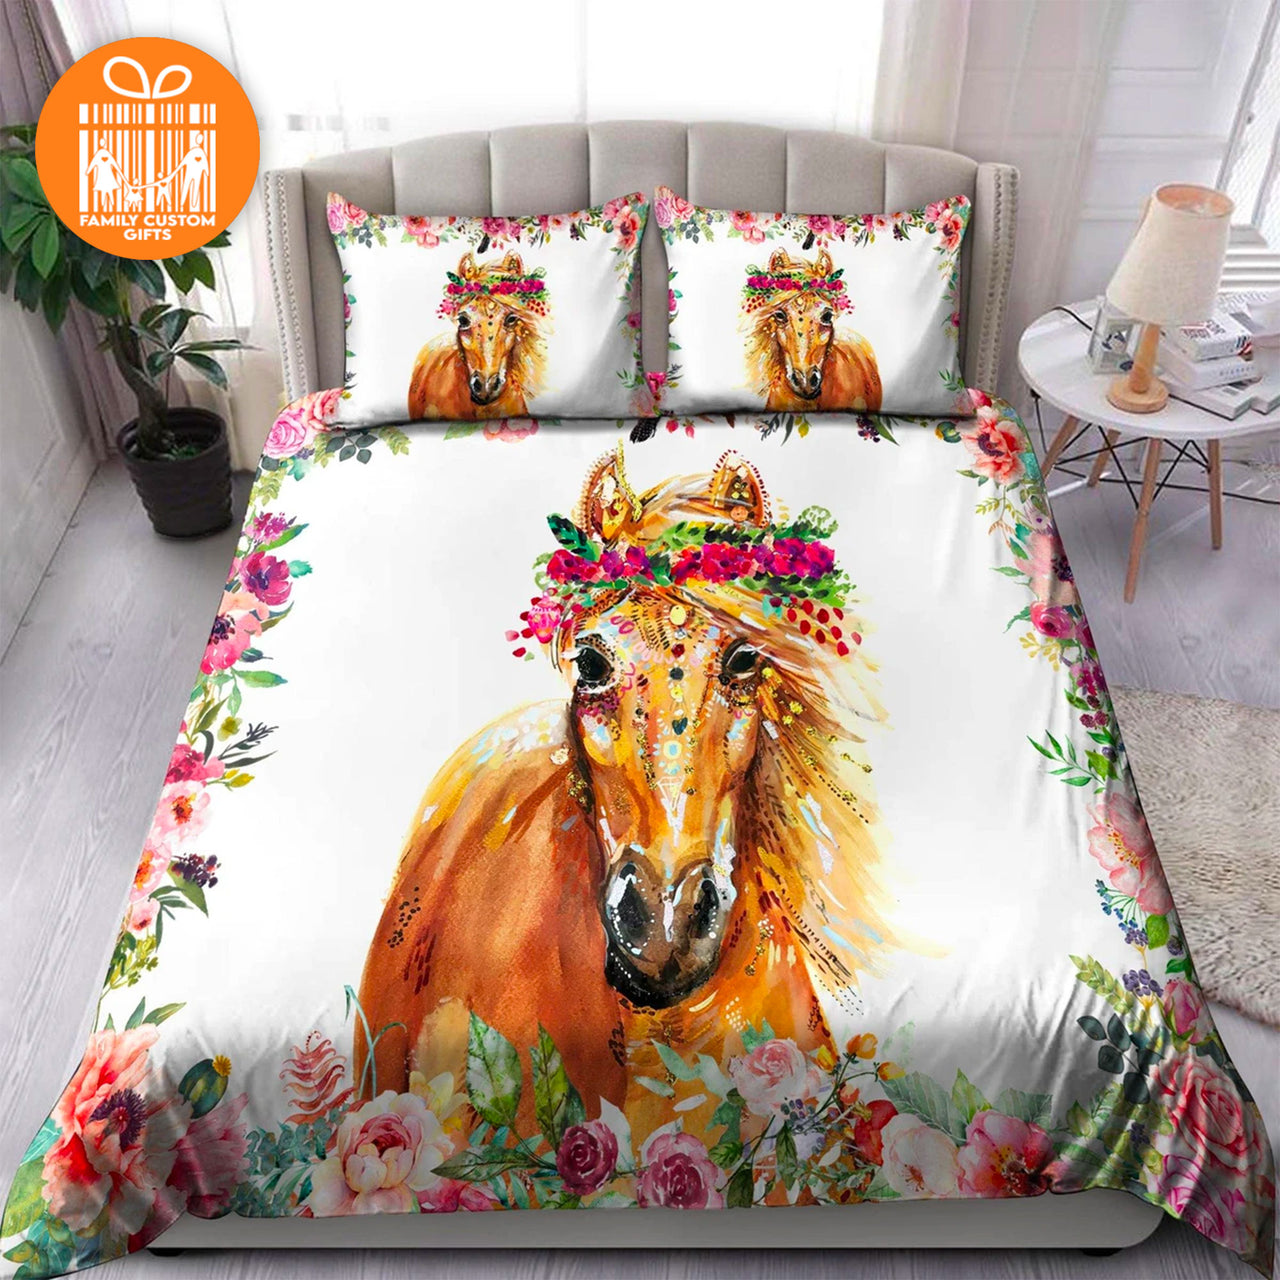 Comforter Floral Horse Custom Bedding Set for Kids Teens Adult Personalized Premium Bed Set